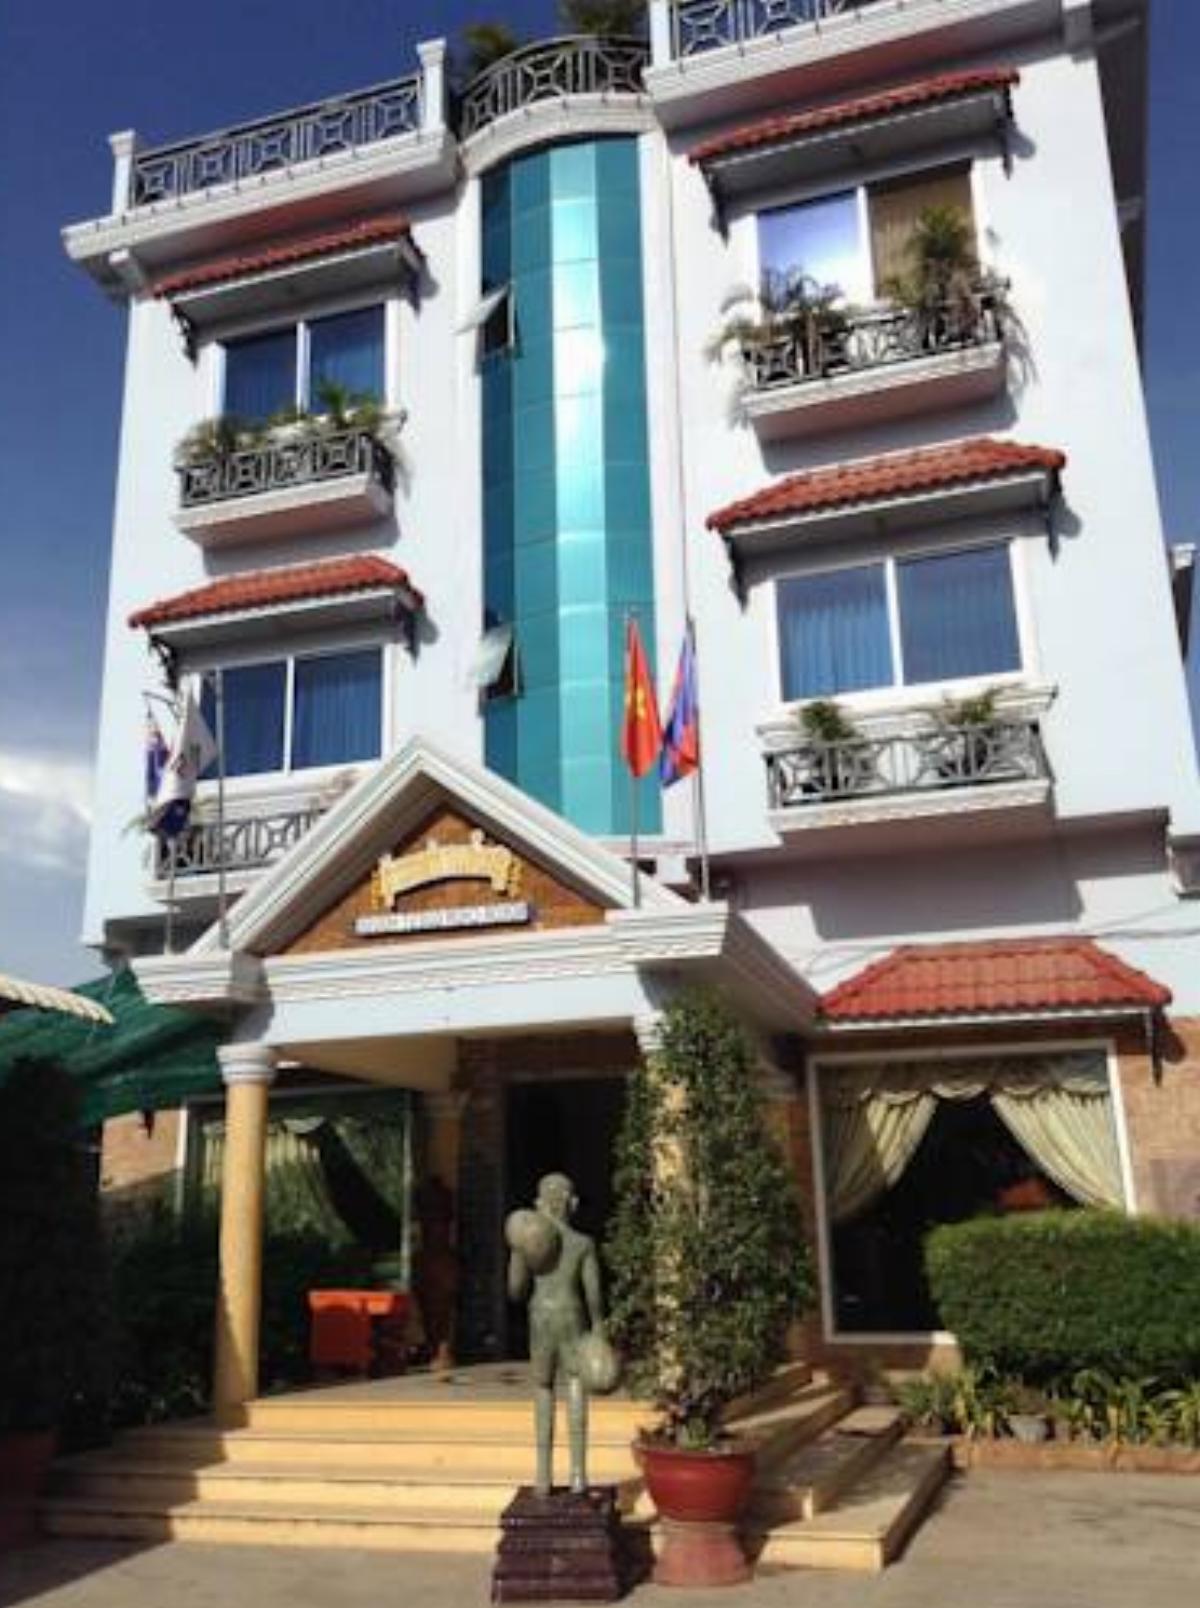 Nokor Chum Guesthouse Hotel Pursat Cambodia